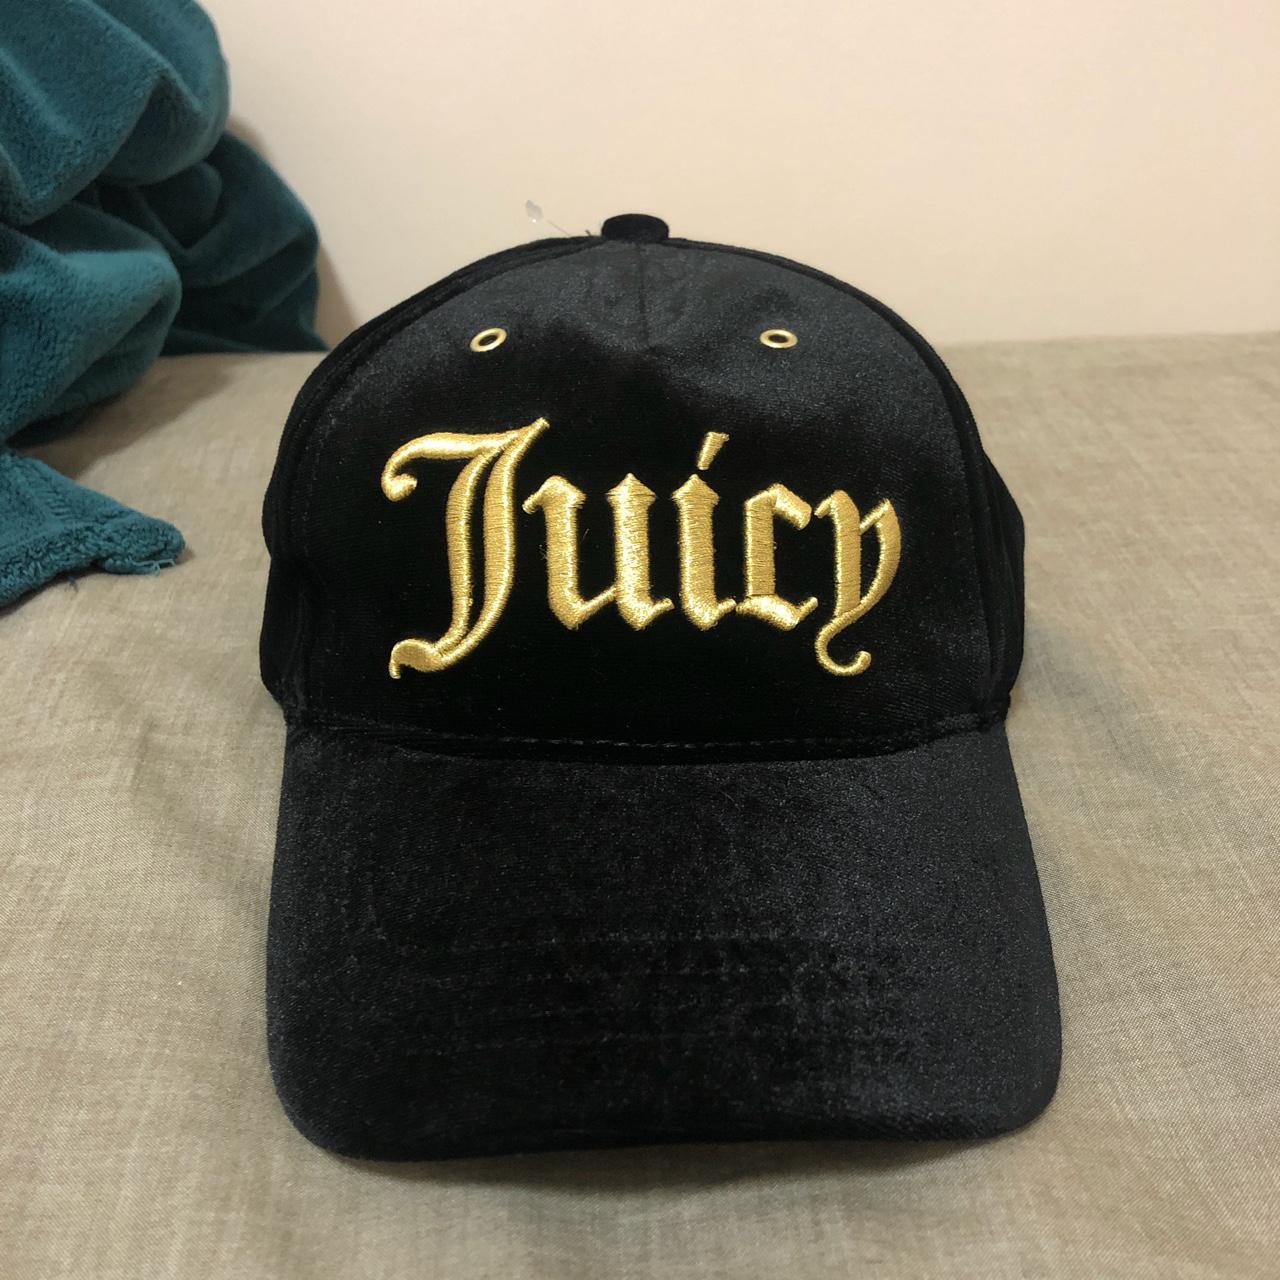 Product Image 1 - Black velvet juicy hat with